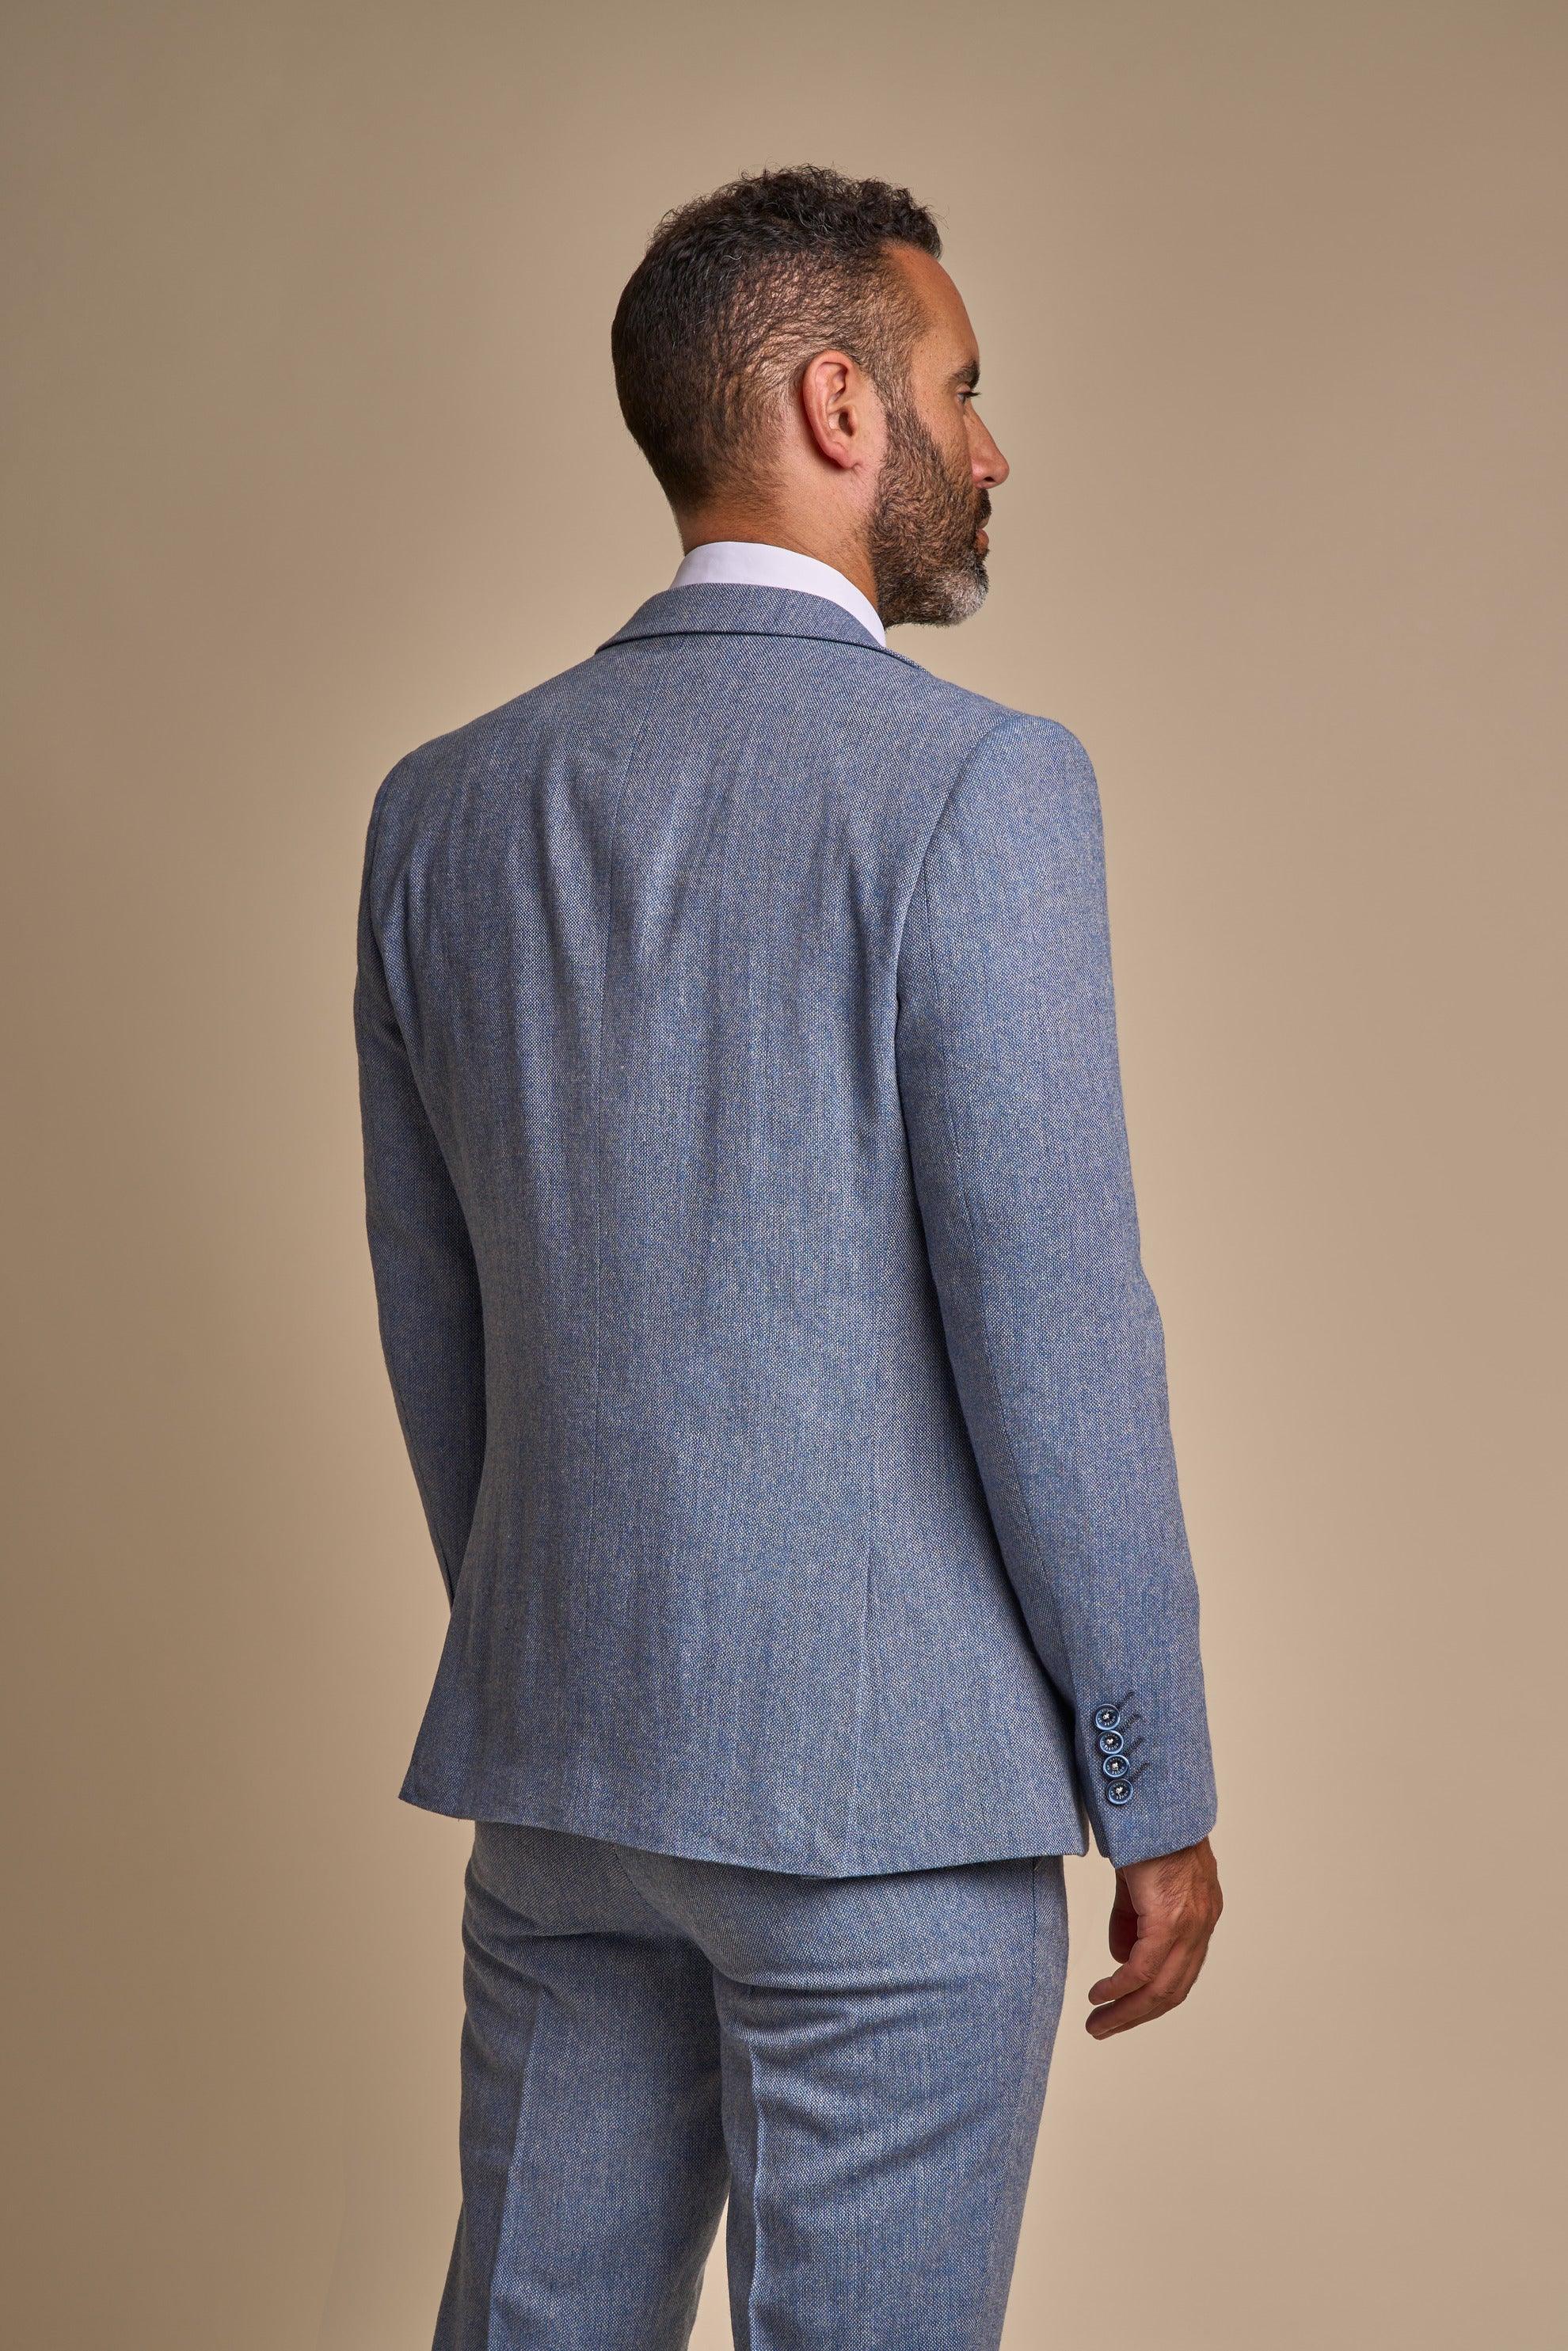 Wells Blue Tweed three piece suit back